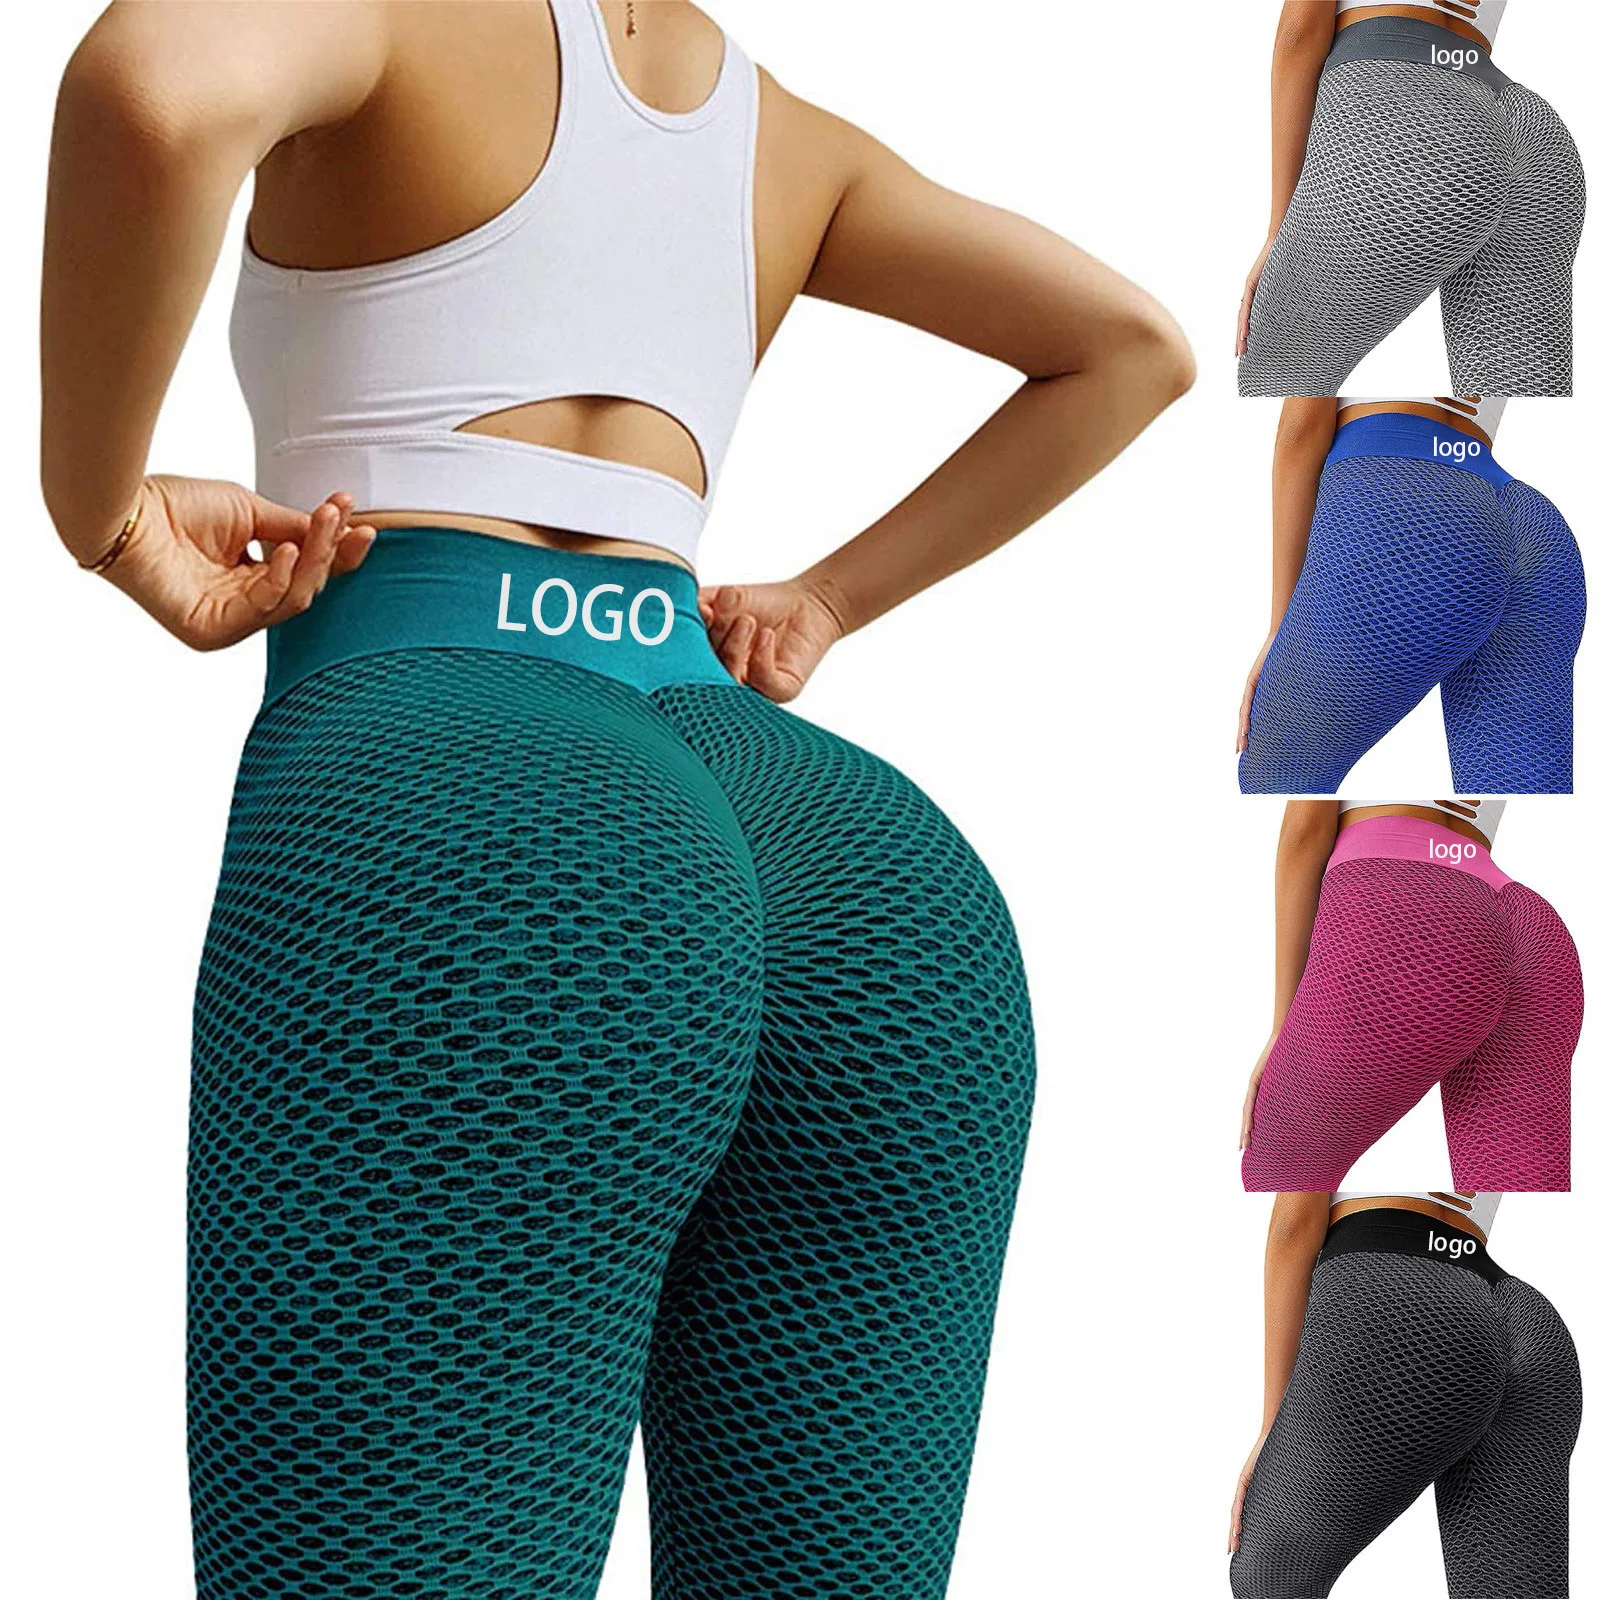 

T3 Best Seller Famous Amazon 2021 Pant Yoga Pushup Butt Scrunch Wholesale Plus Size Lifting Push Up TikTok Leggings From Women, Customized colors